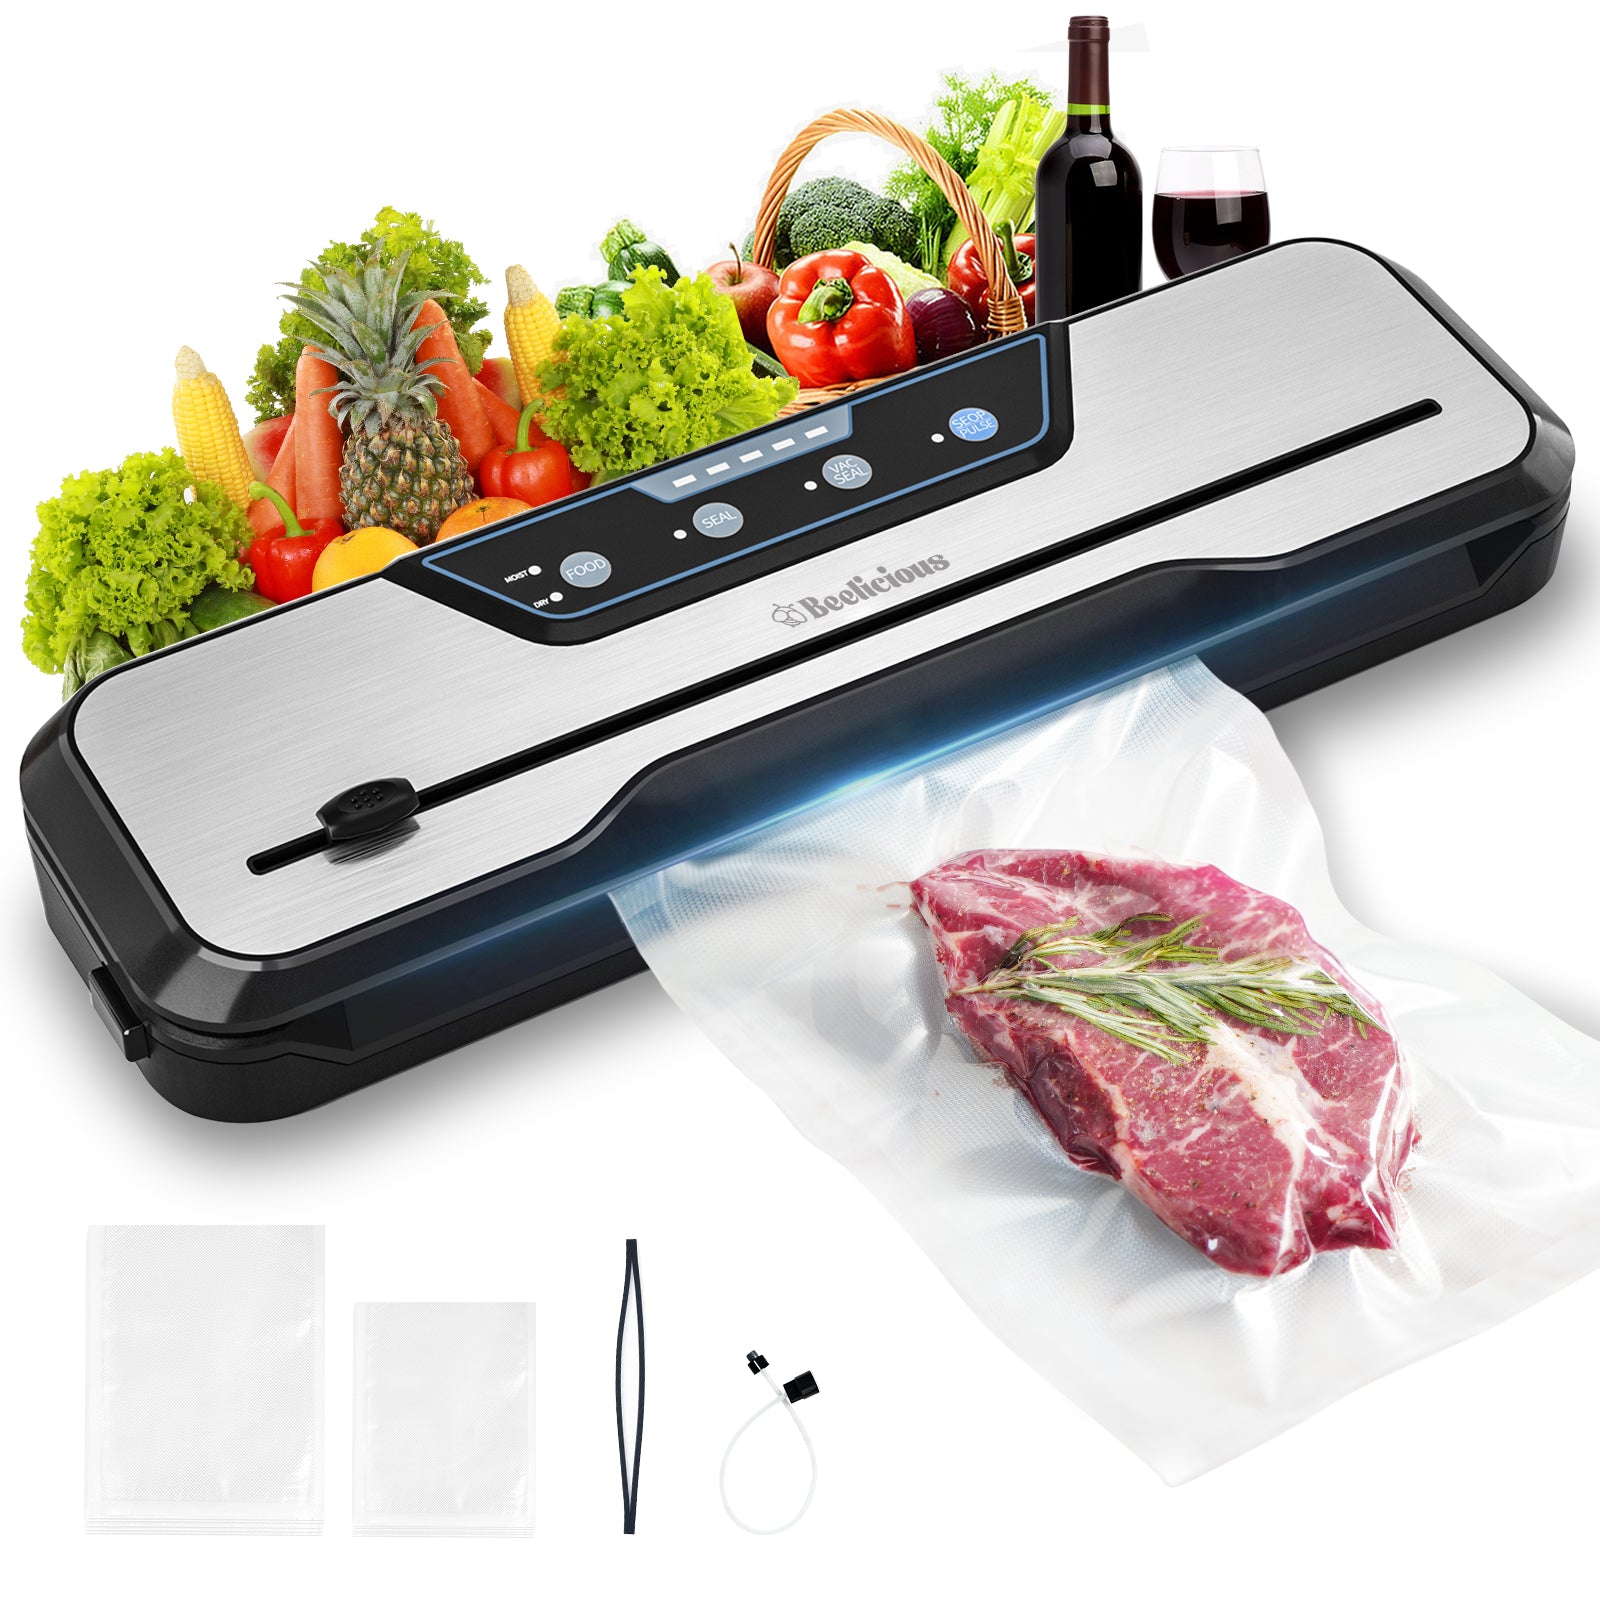 Food Vacuum Sealer Machine, Manual or Automatic Dry & Moist Food Modes,  Black 